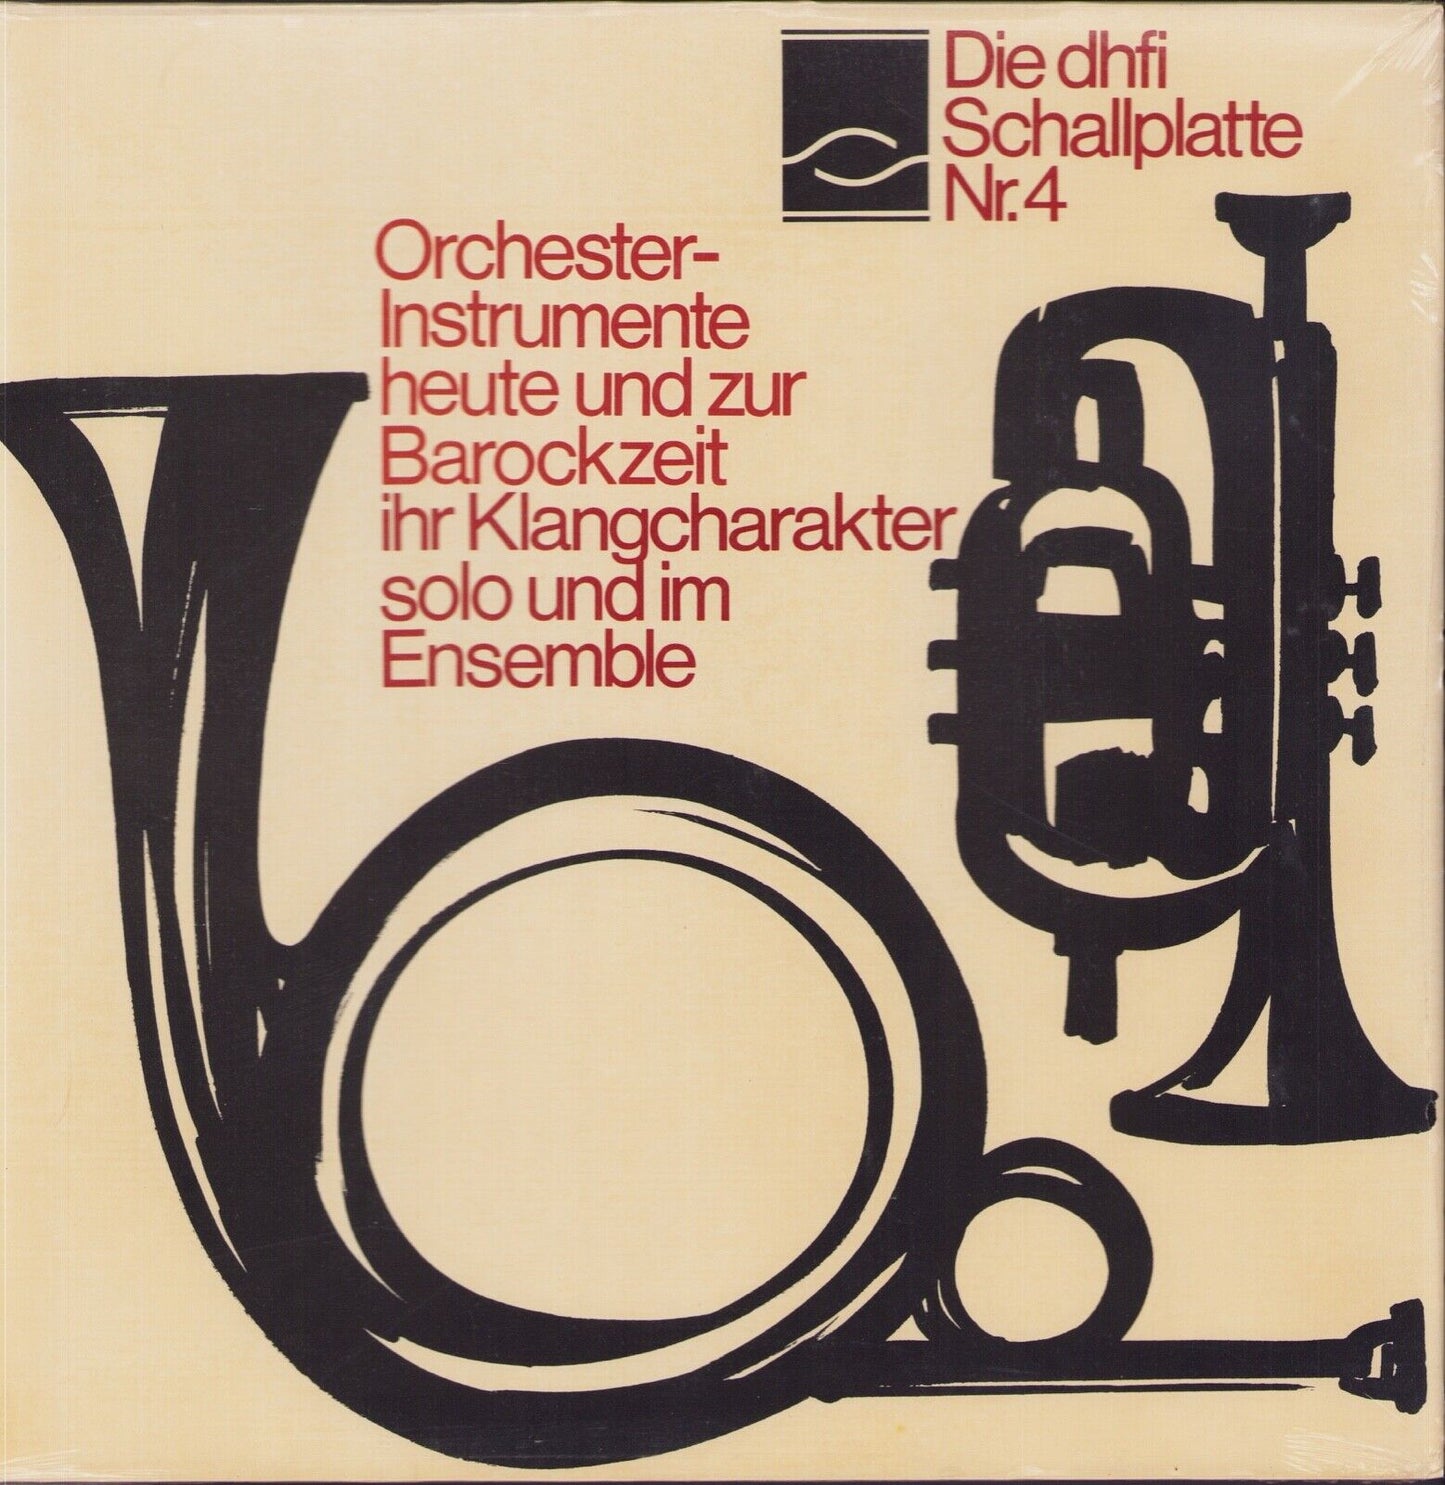 Concentus Musicus Wien, Wiener Philharmoniker ‎- Die Dhfi Schallplatte Nr.4 Vinyl LP